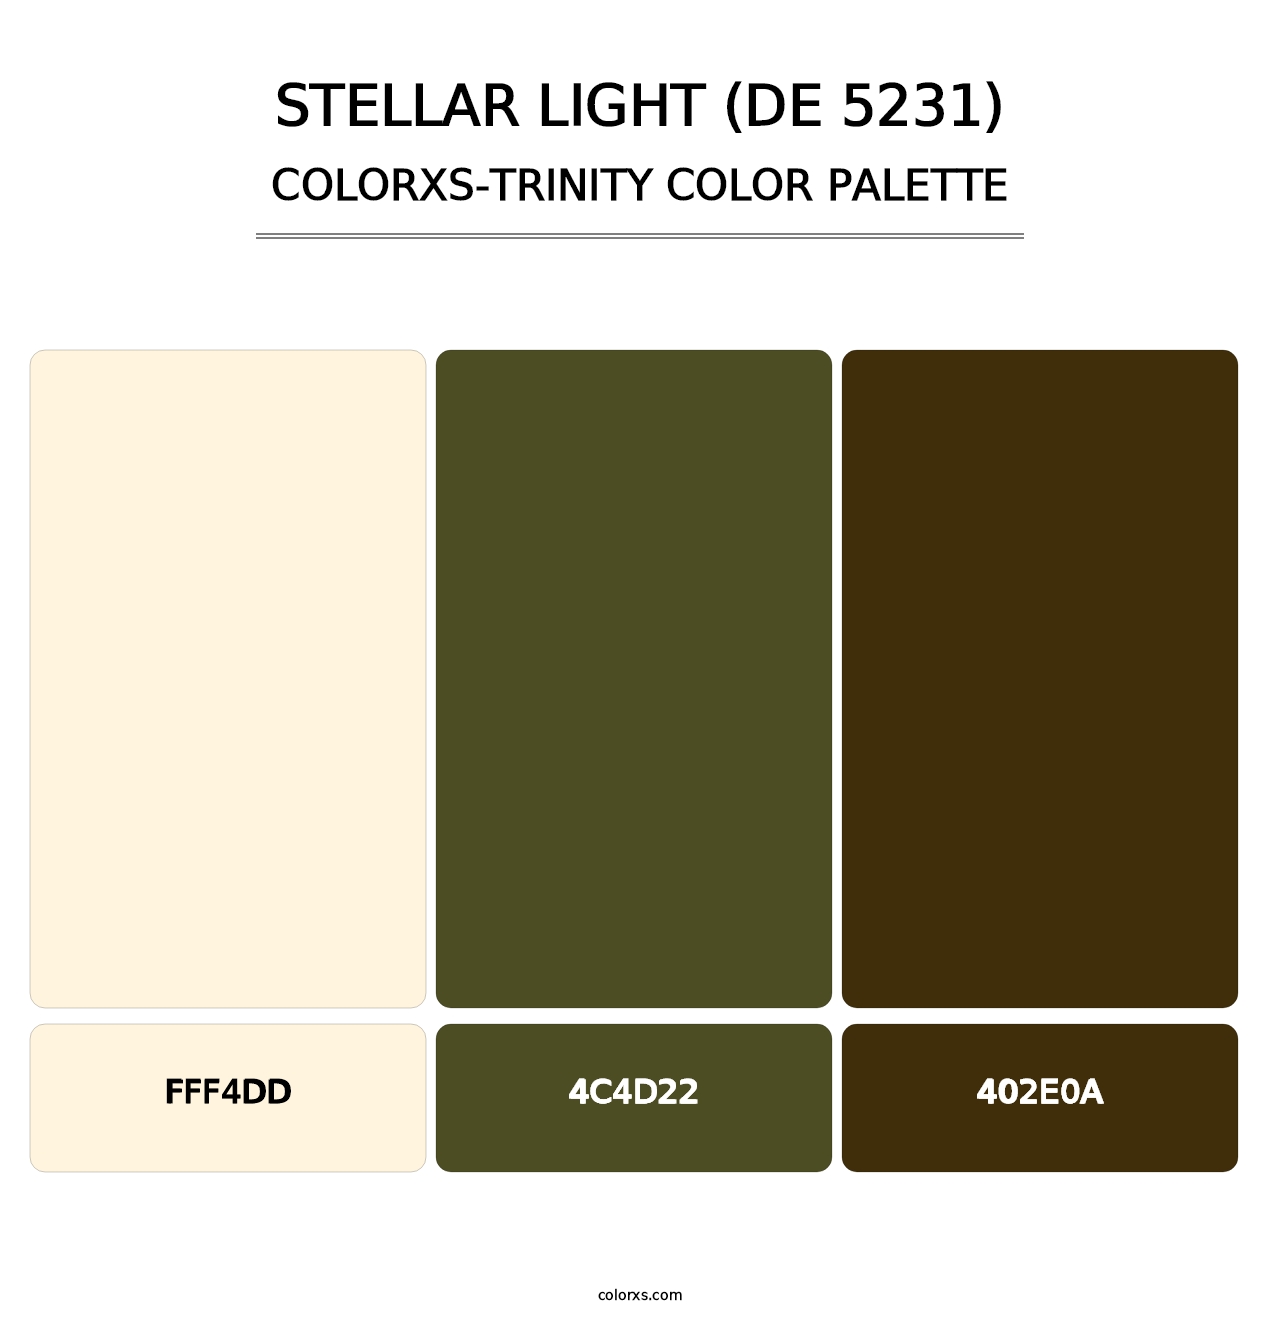 Stellar Light (DE 5231) - Colorxs Trinity Palette